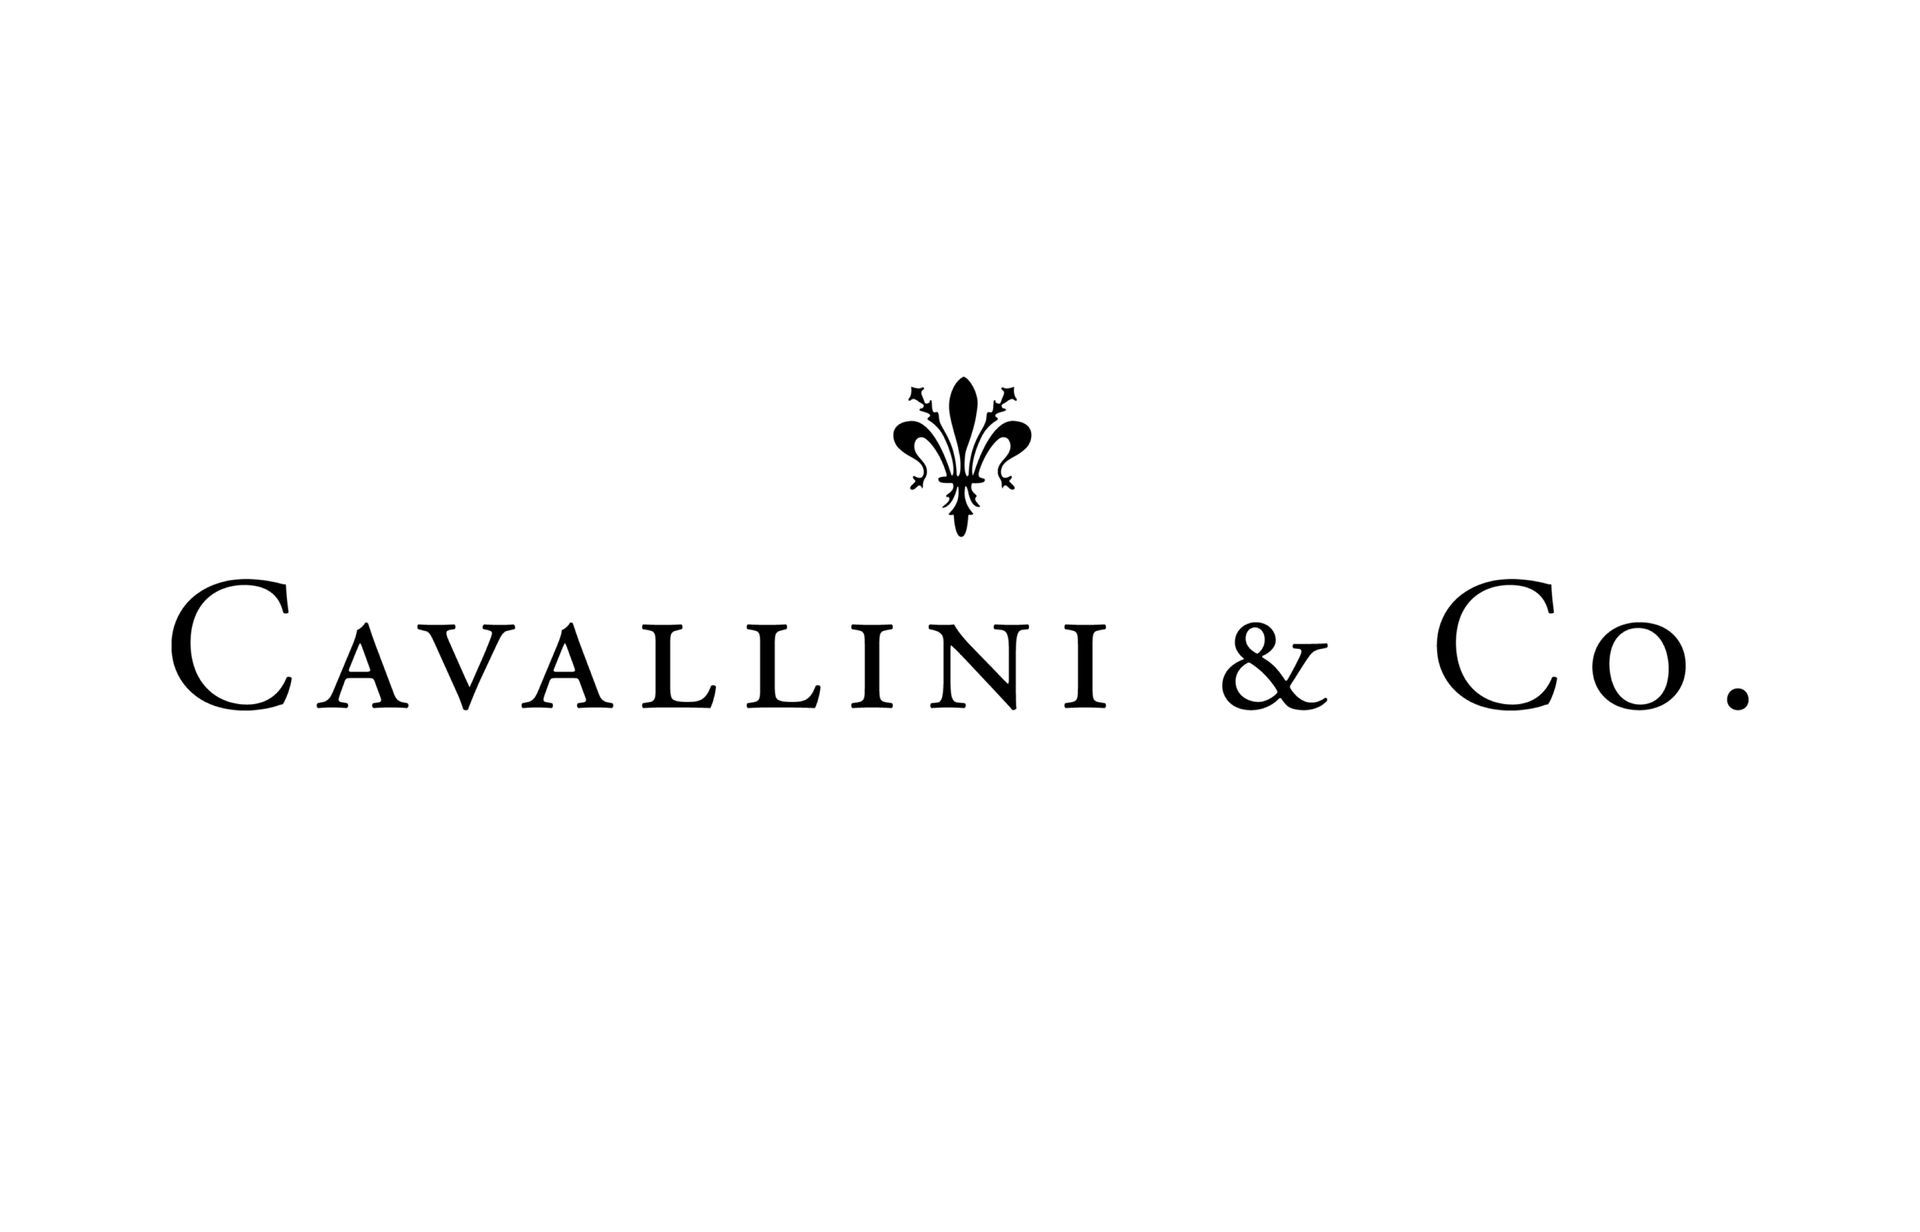 Logo da Cavallini & Co. em fundo branco